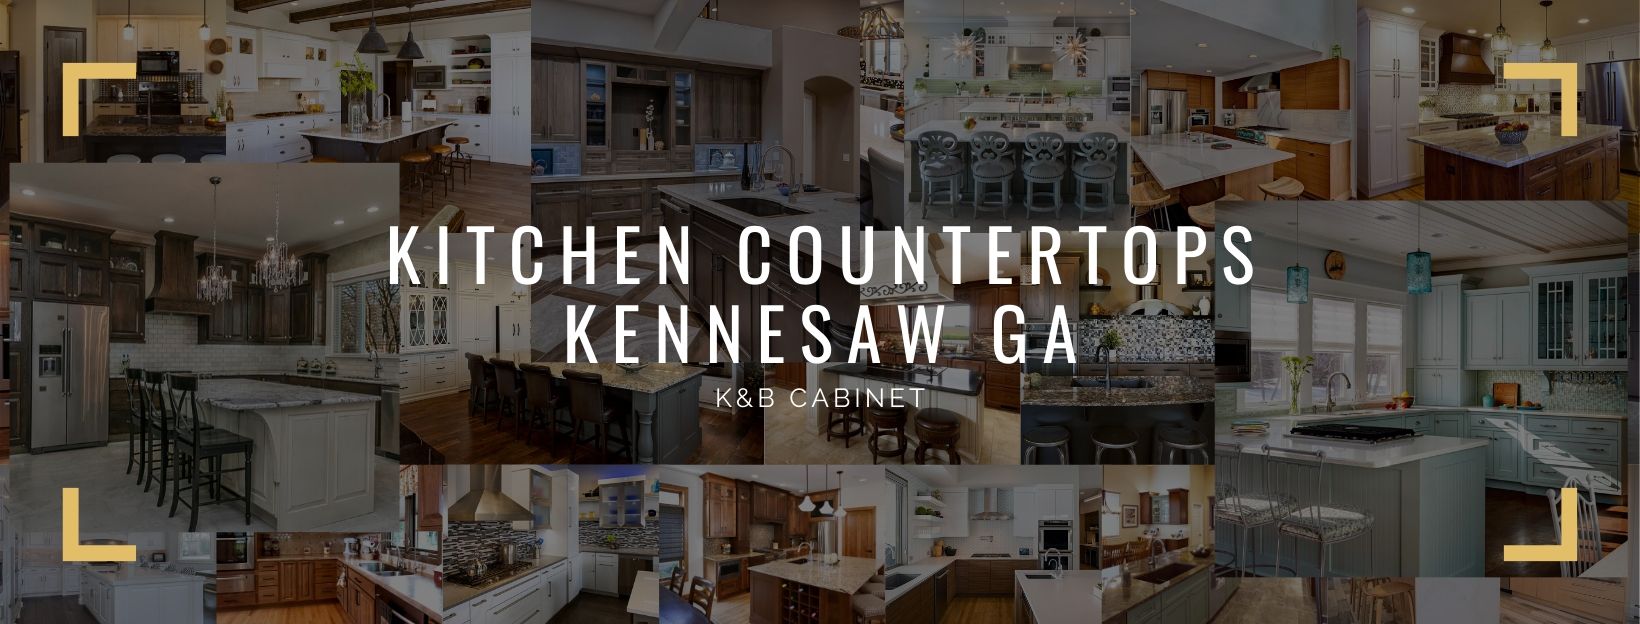 Kitchen Countertops Kennesaw GA